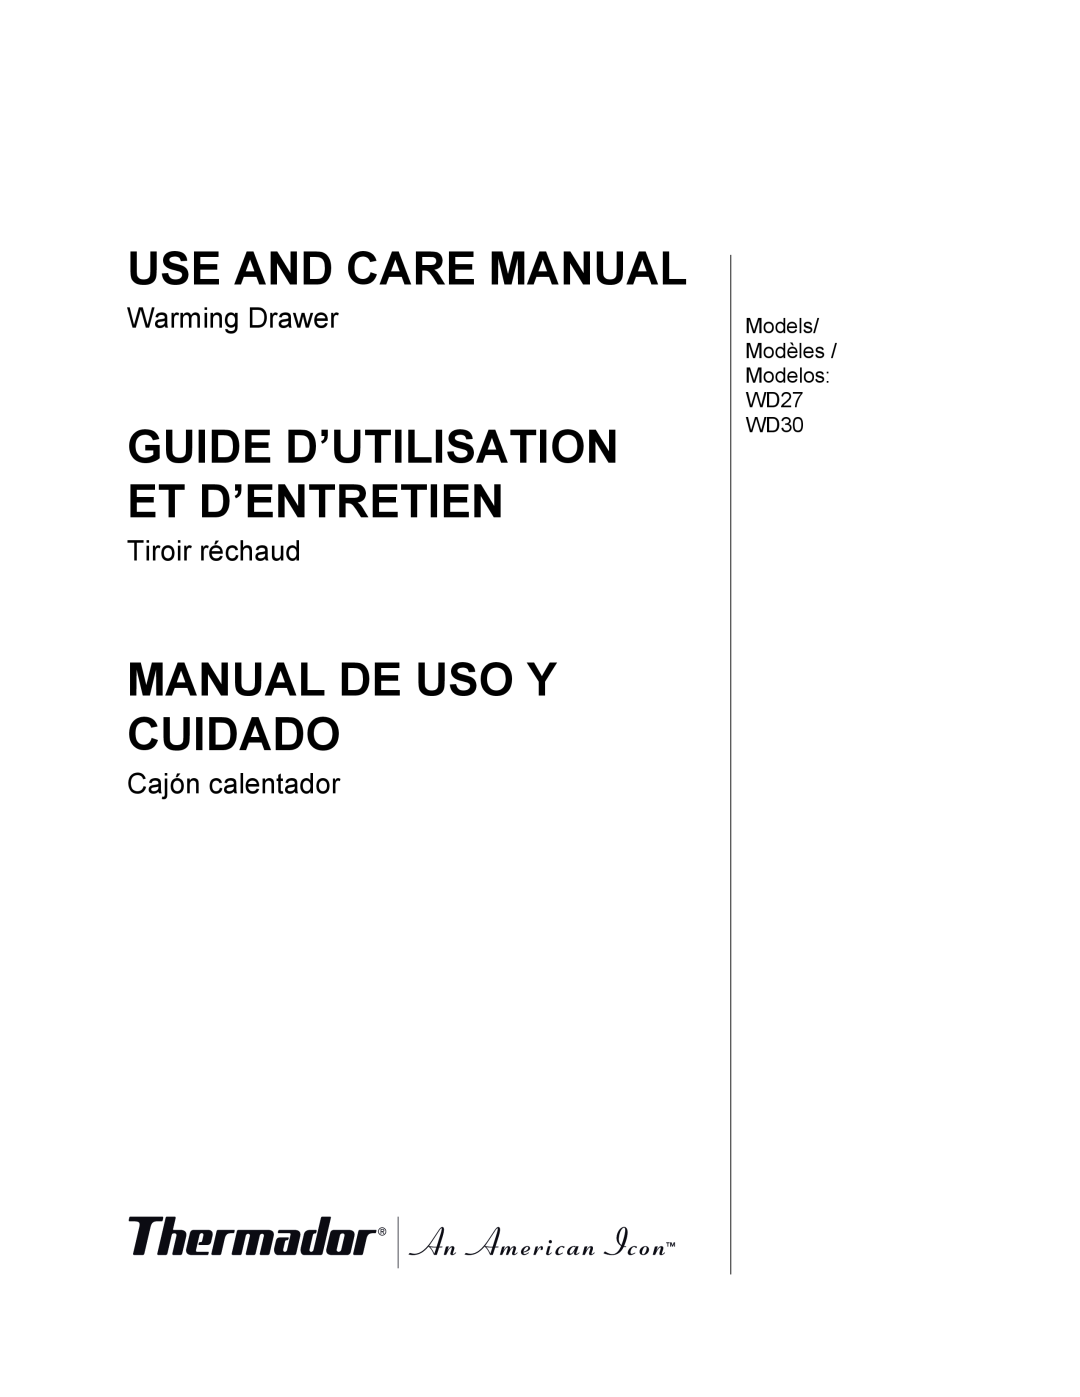 Thermador WD27 manual Use And Care Manual, Guide D’Utilisation Et D’Entretien, Manual De Uso Y Cuidado, Warming Drawer 